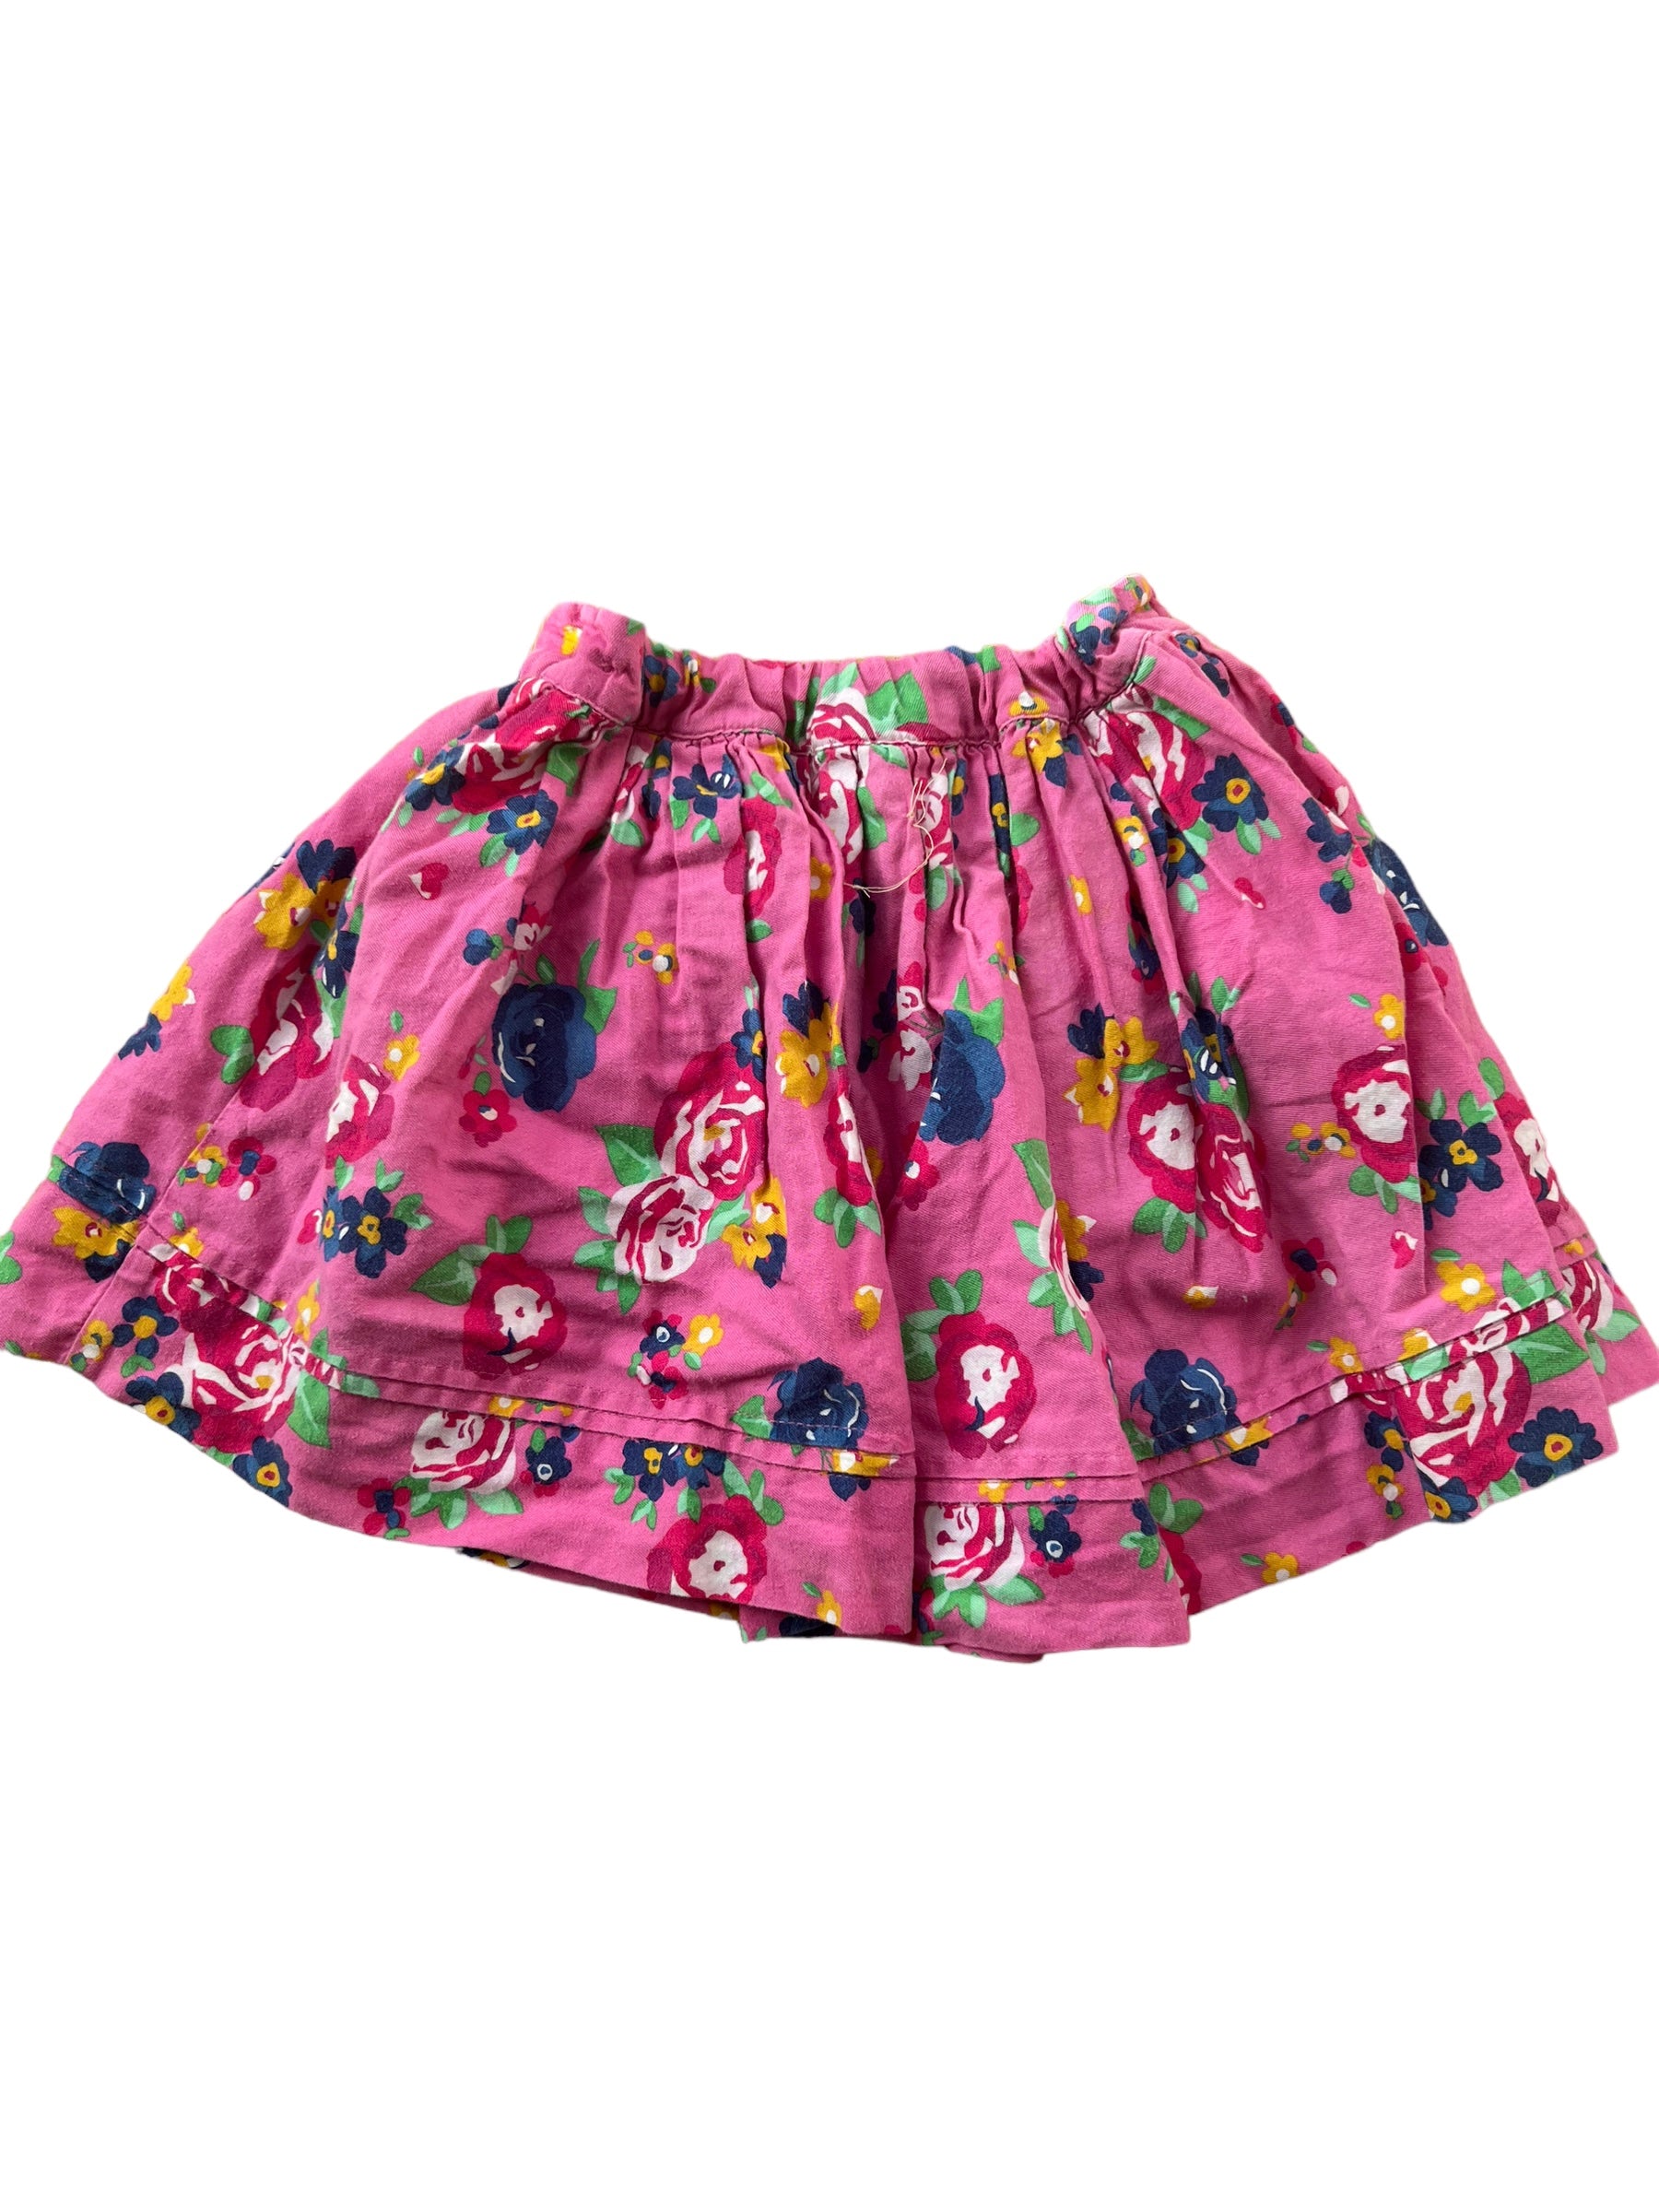 M&S Kids Floral Skirt